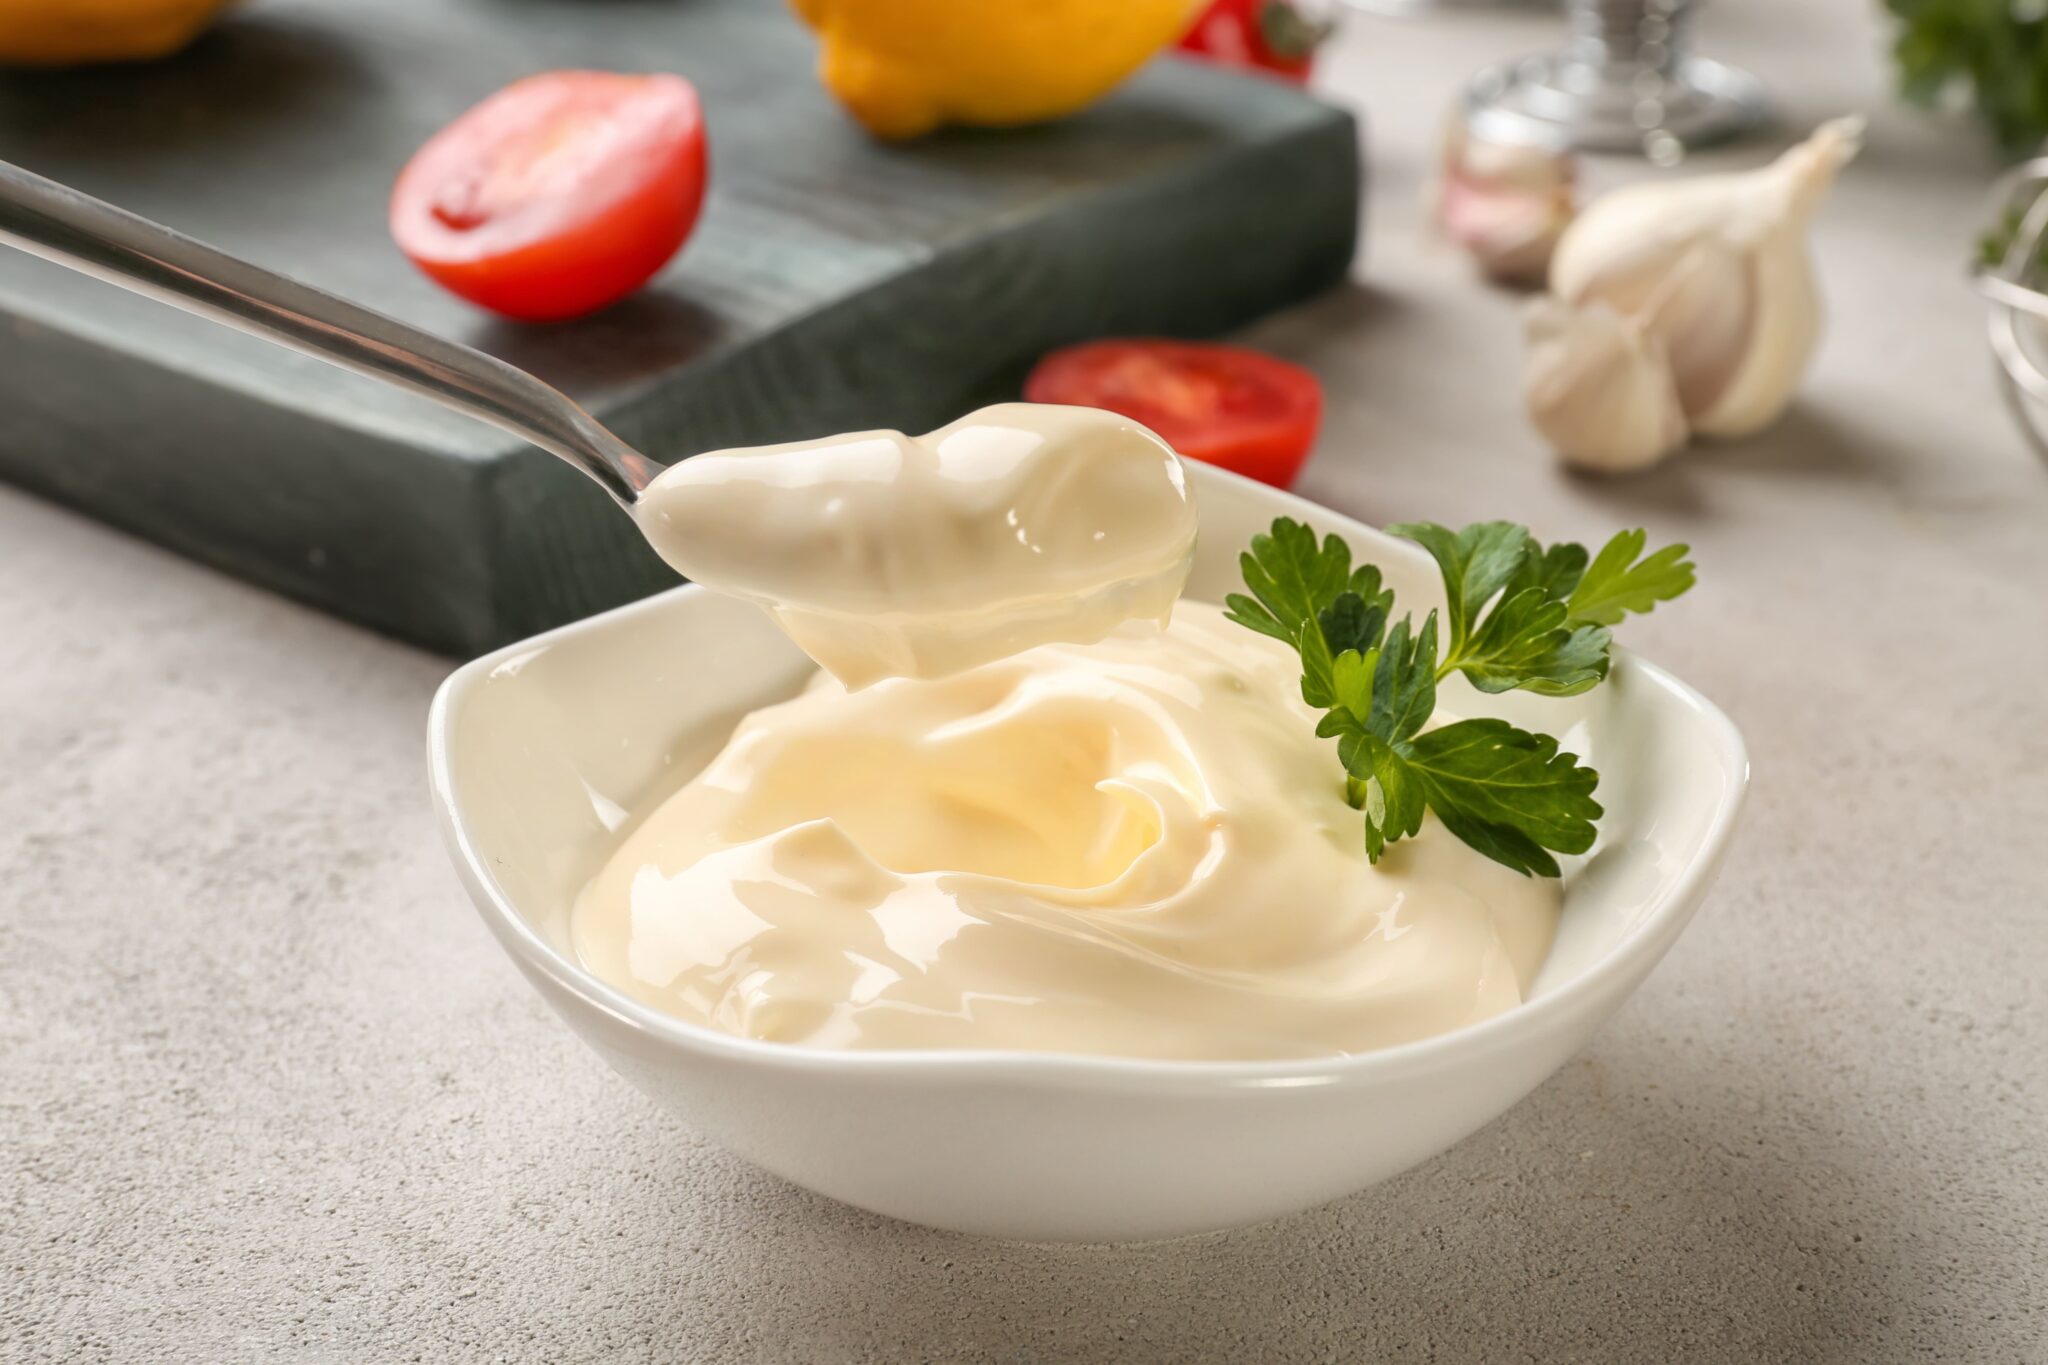 Homemade olive oil mayonnaise recipe